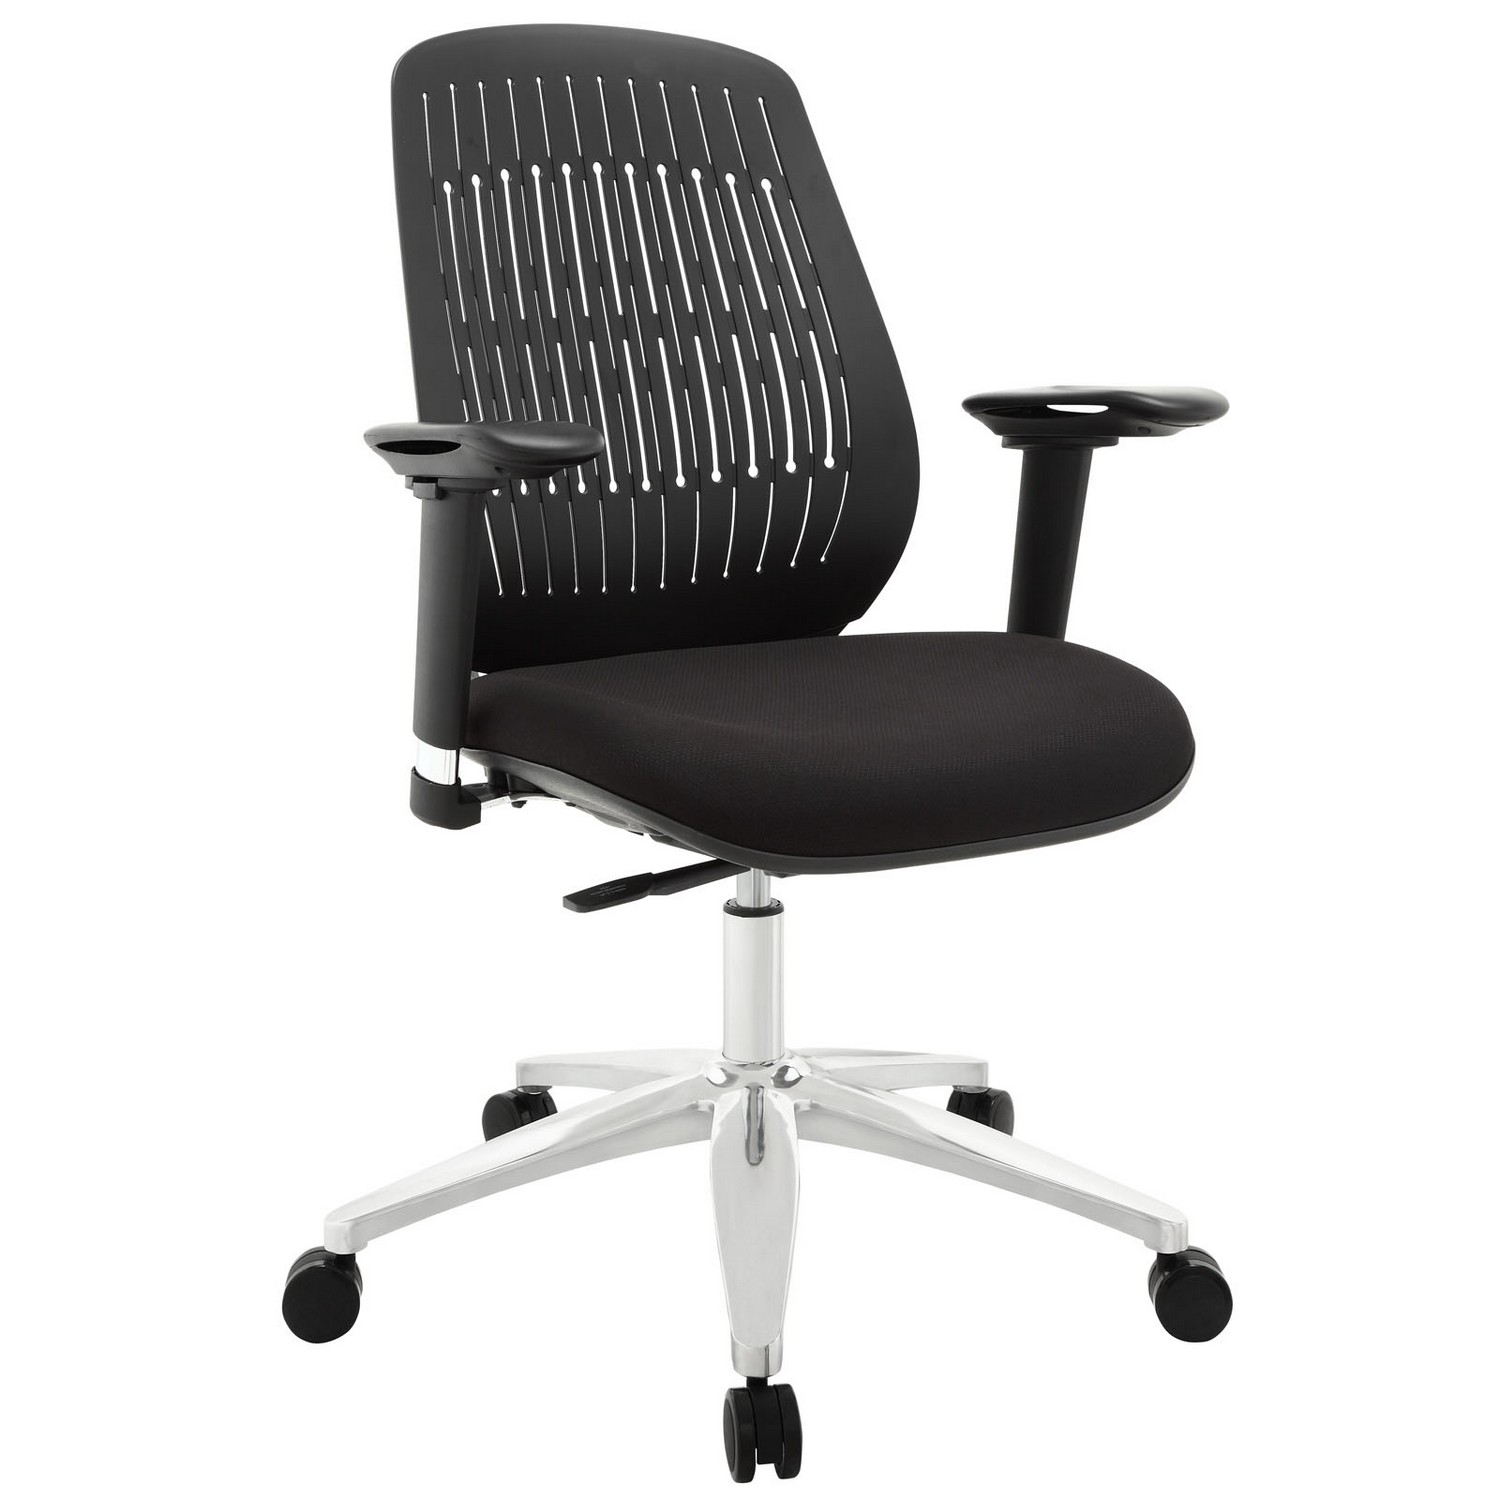 Modway Reveal Premium Office Chair - Black